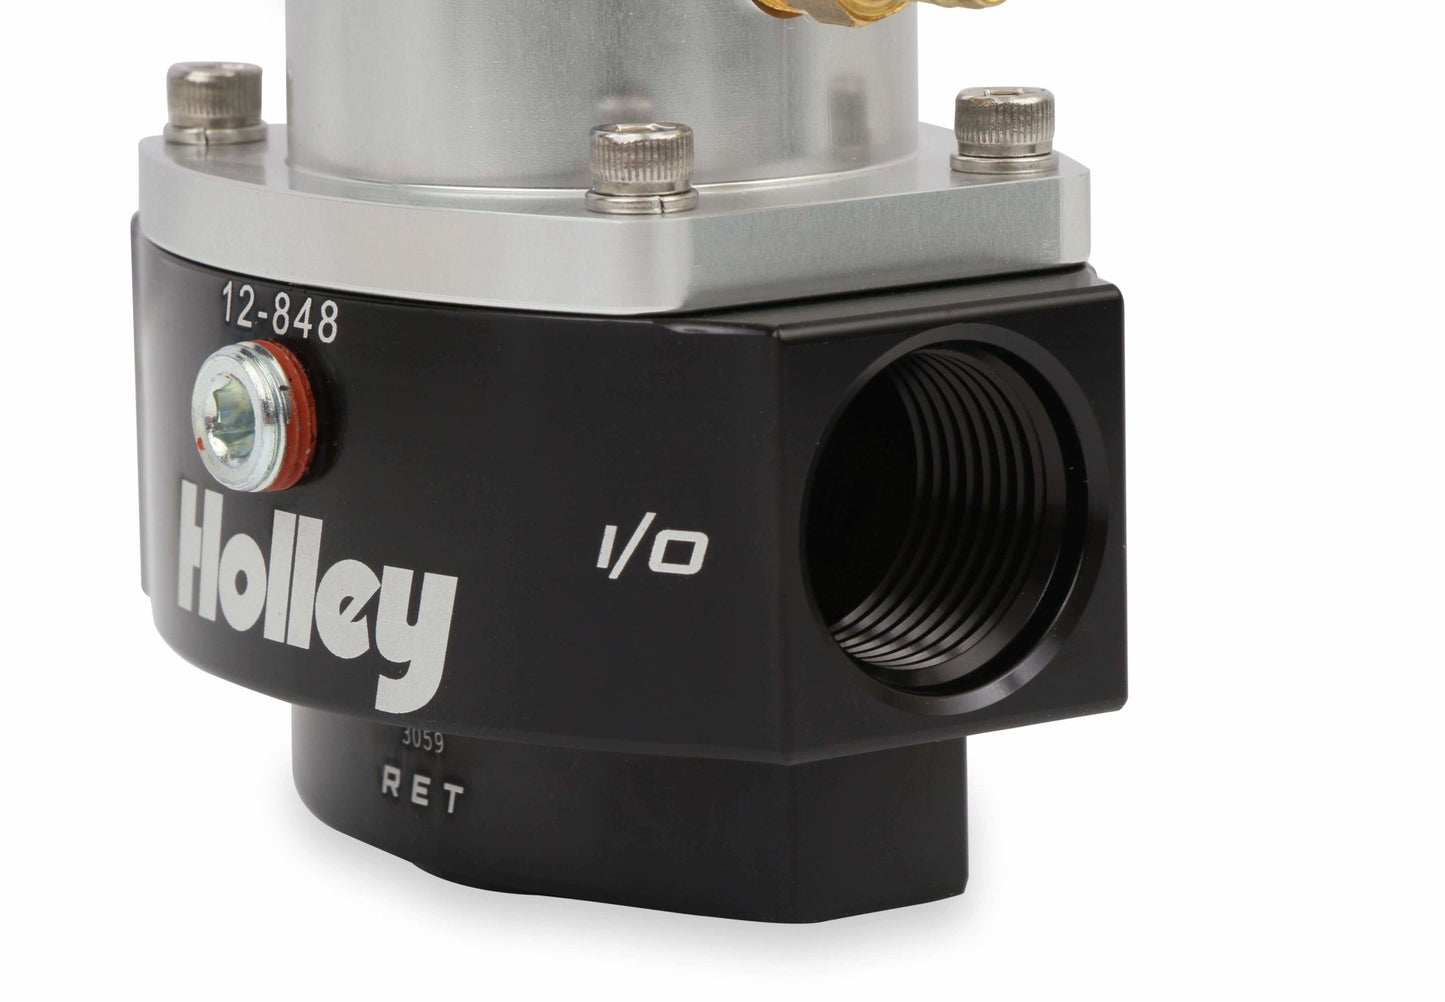 Holley Performance Fuel Pressure Regulator 12-848 - Hot Rod fuel hose by One Guy Garage